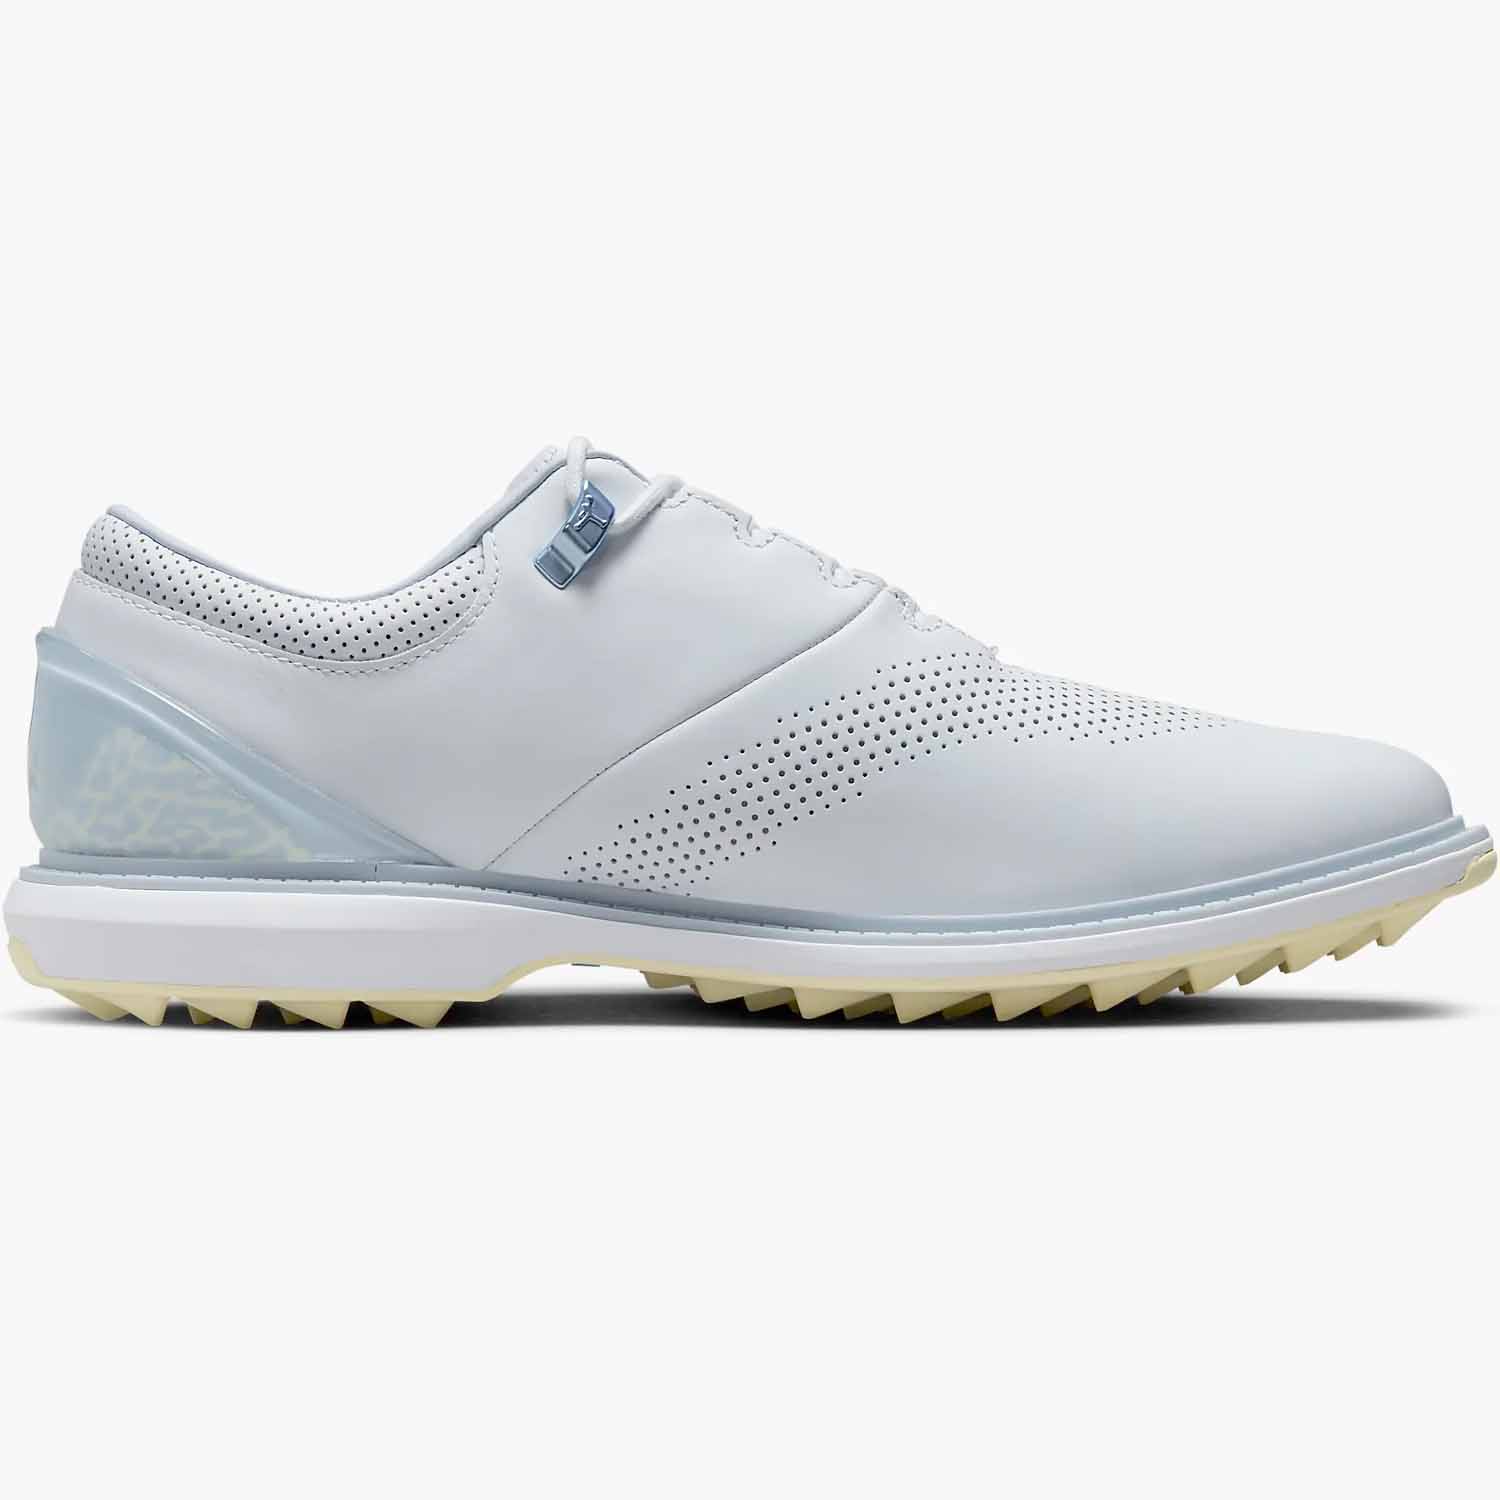 Nike Golf Air Jordan ADG 4 Spikeless Golf Shoes  - Grey/Alabaster